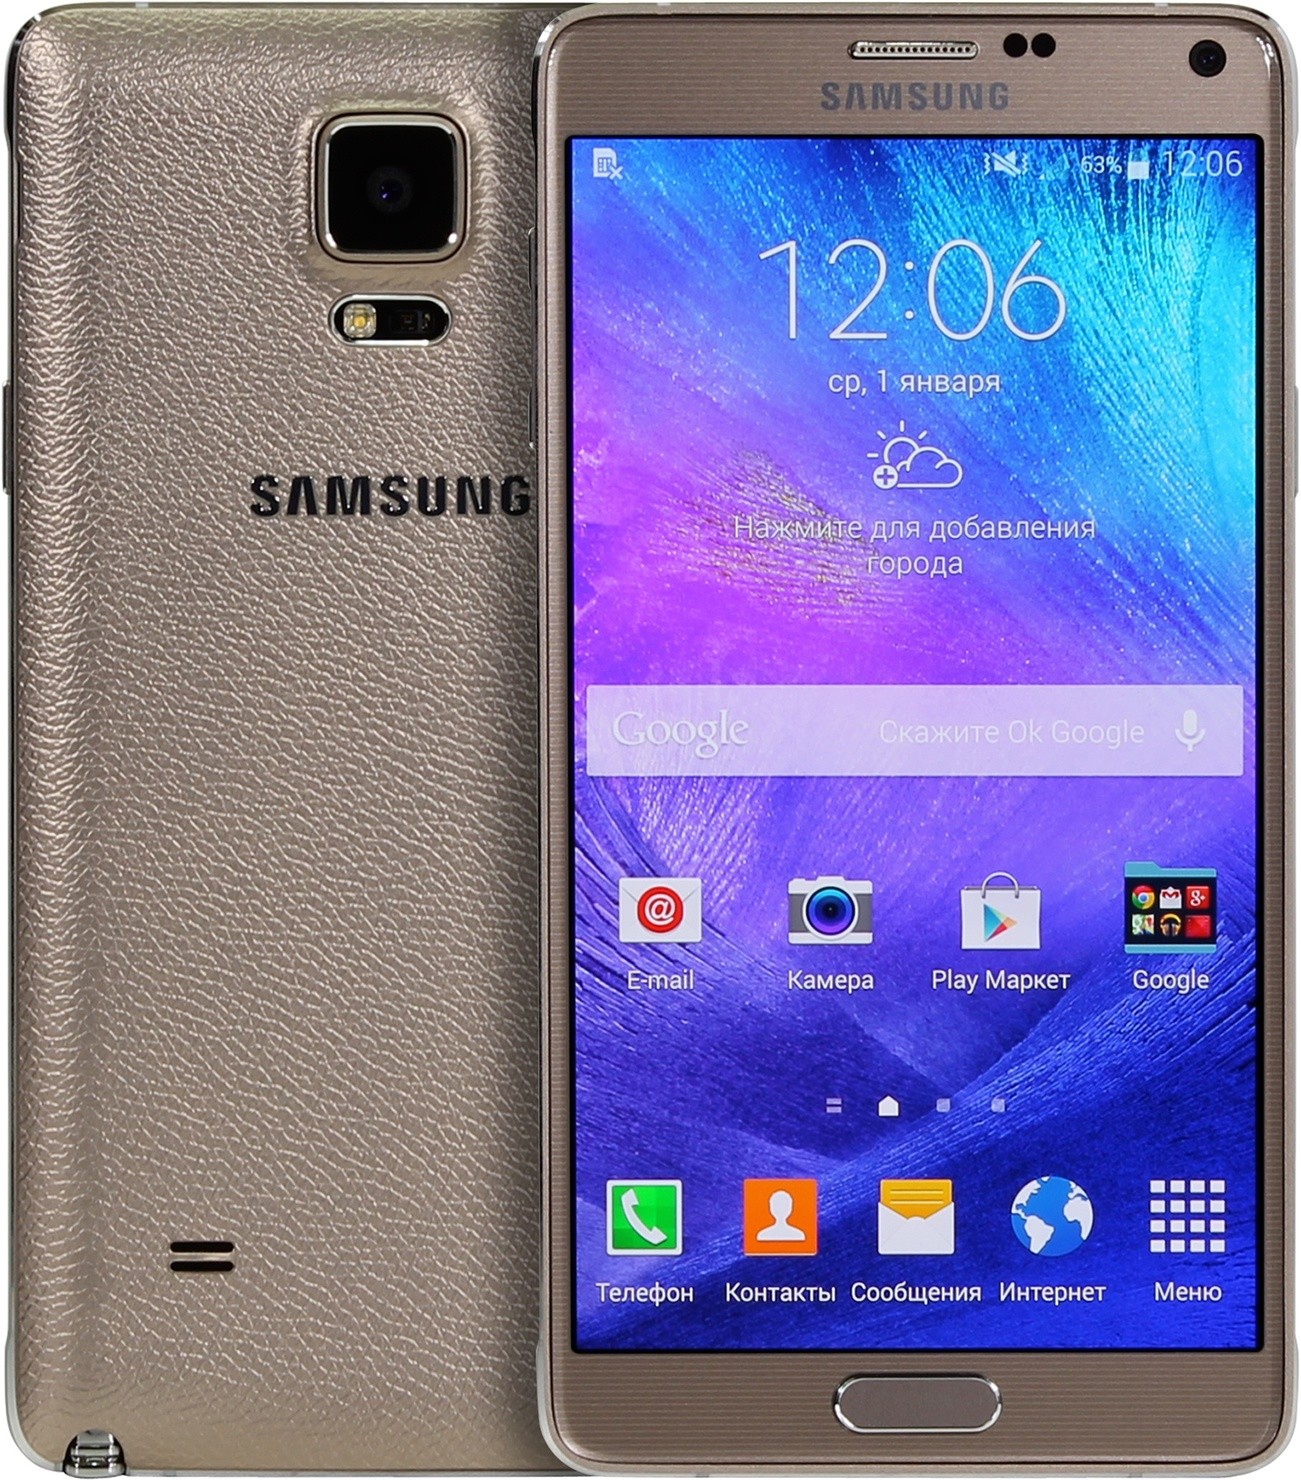 Самсунг а01 память. Самсунг галакси нот 4. Самсунг SM-a300f. Смартфон Samsung SM a300f. Samsung n910c / Note 4.